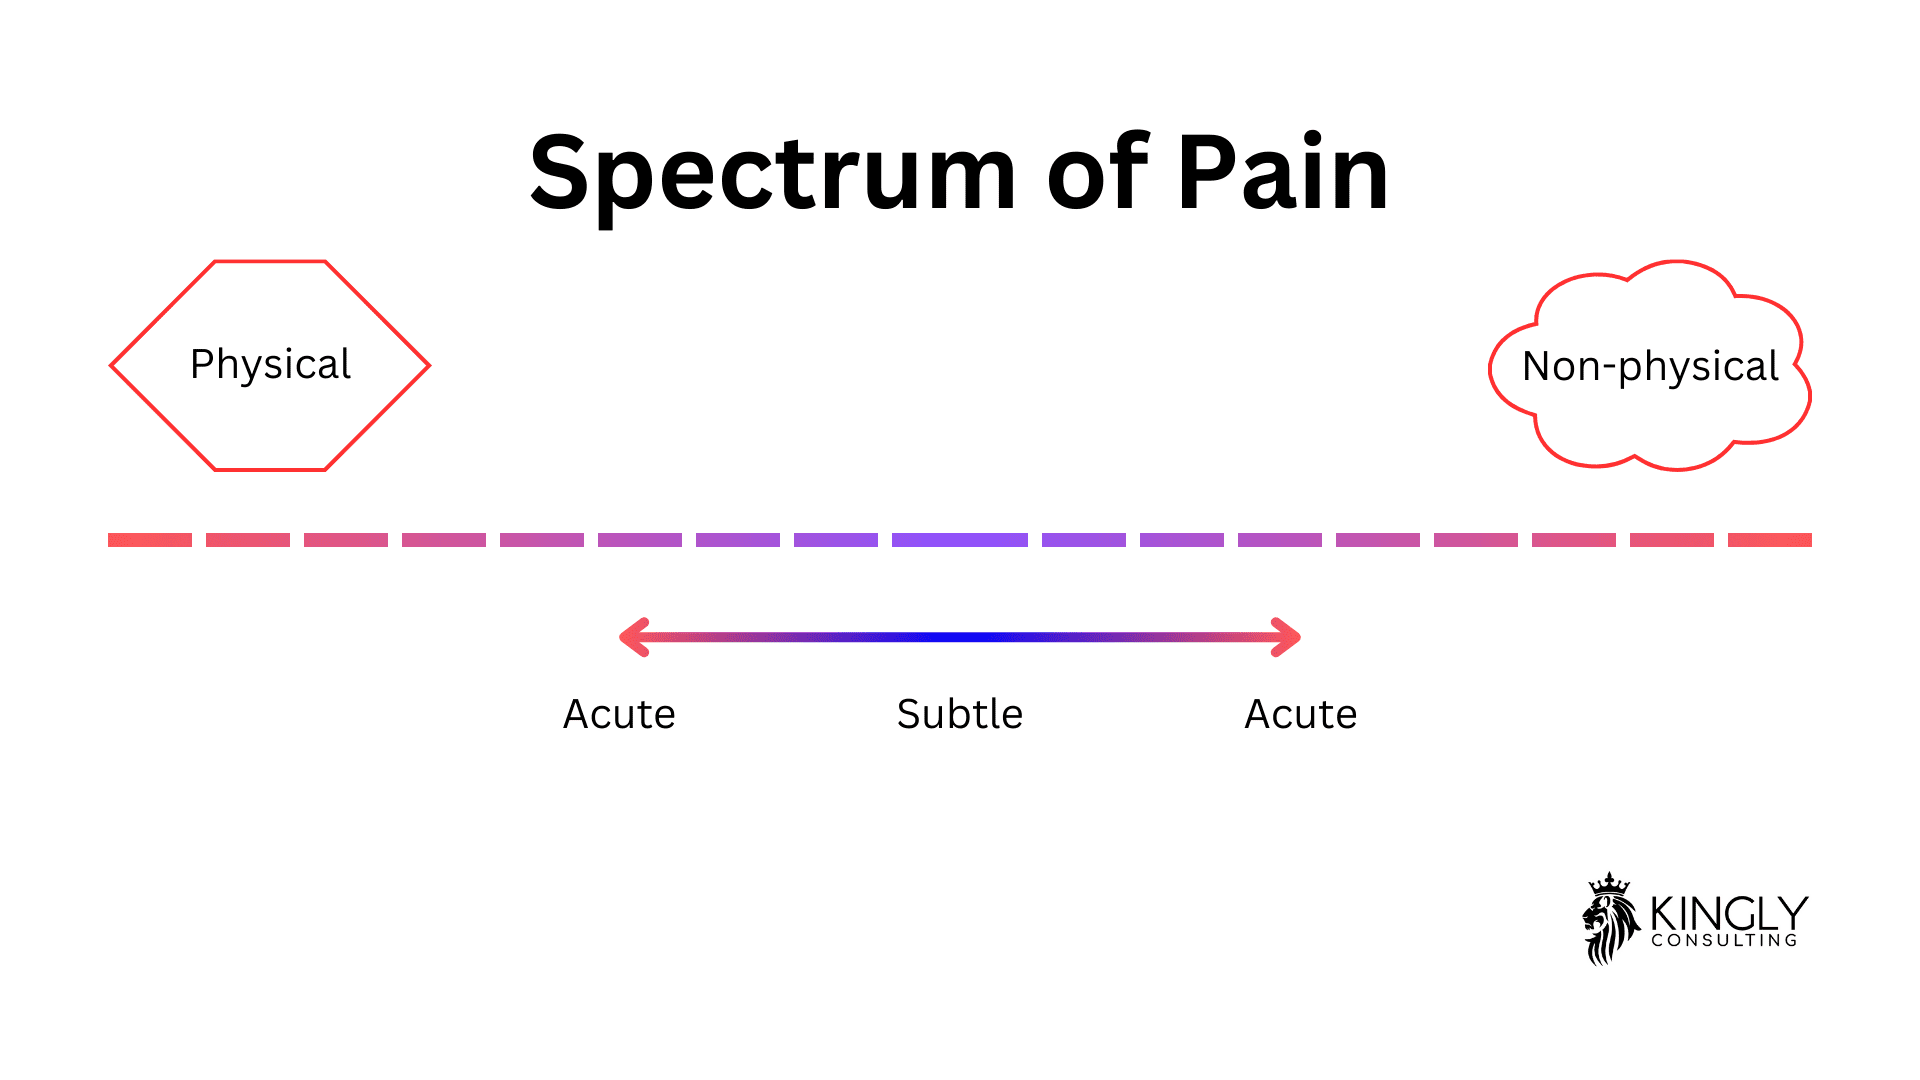 The spectrum of pain